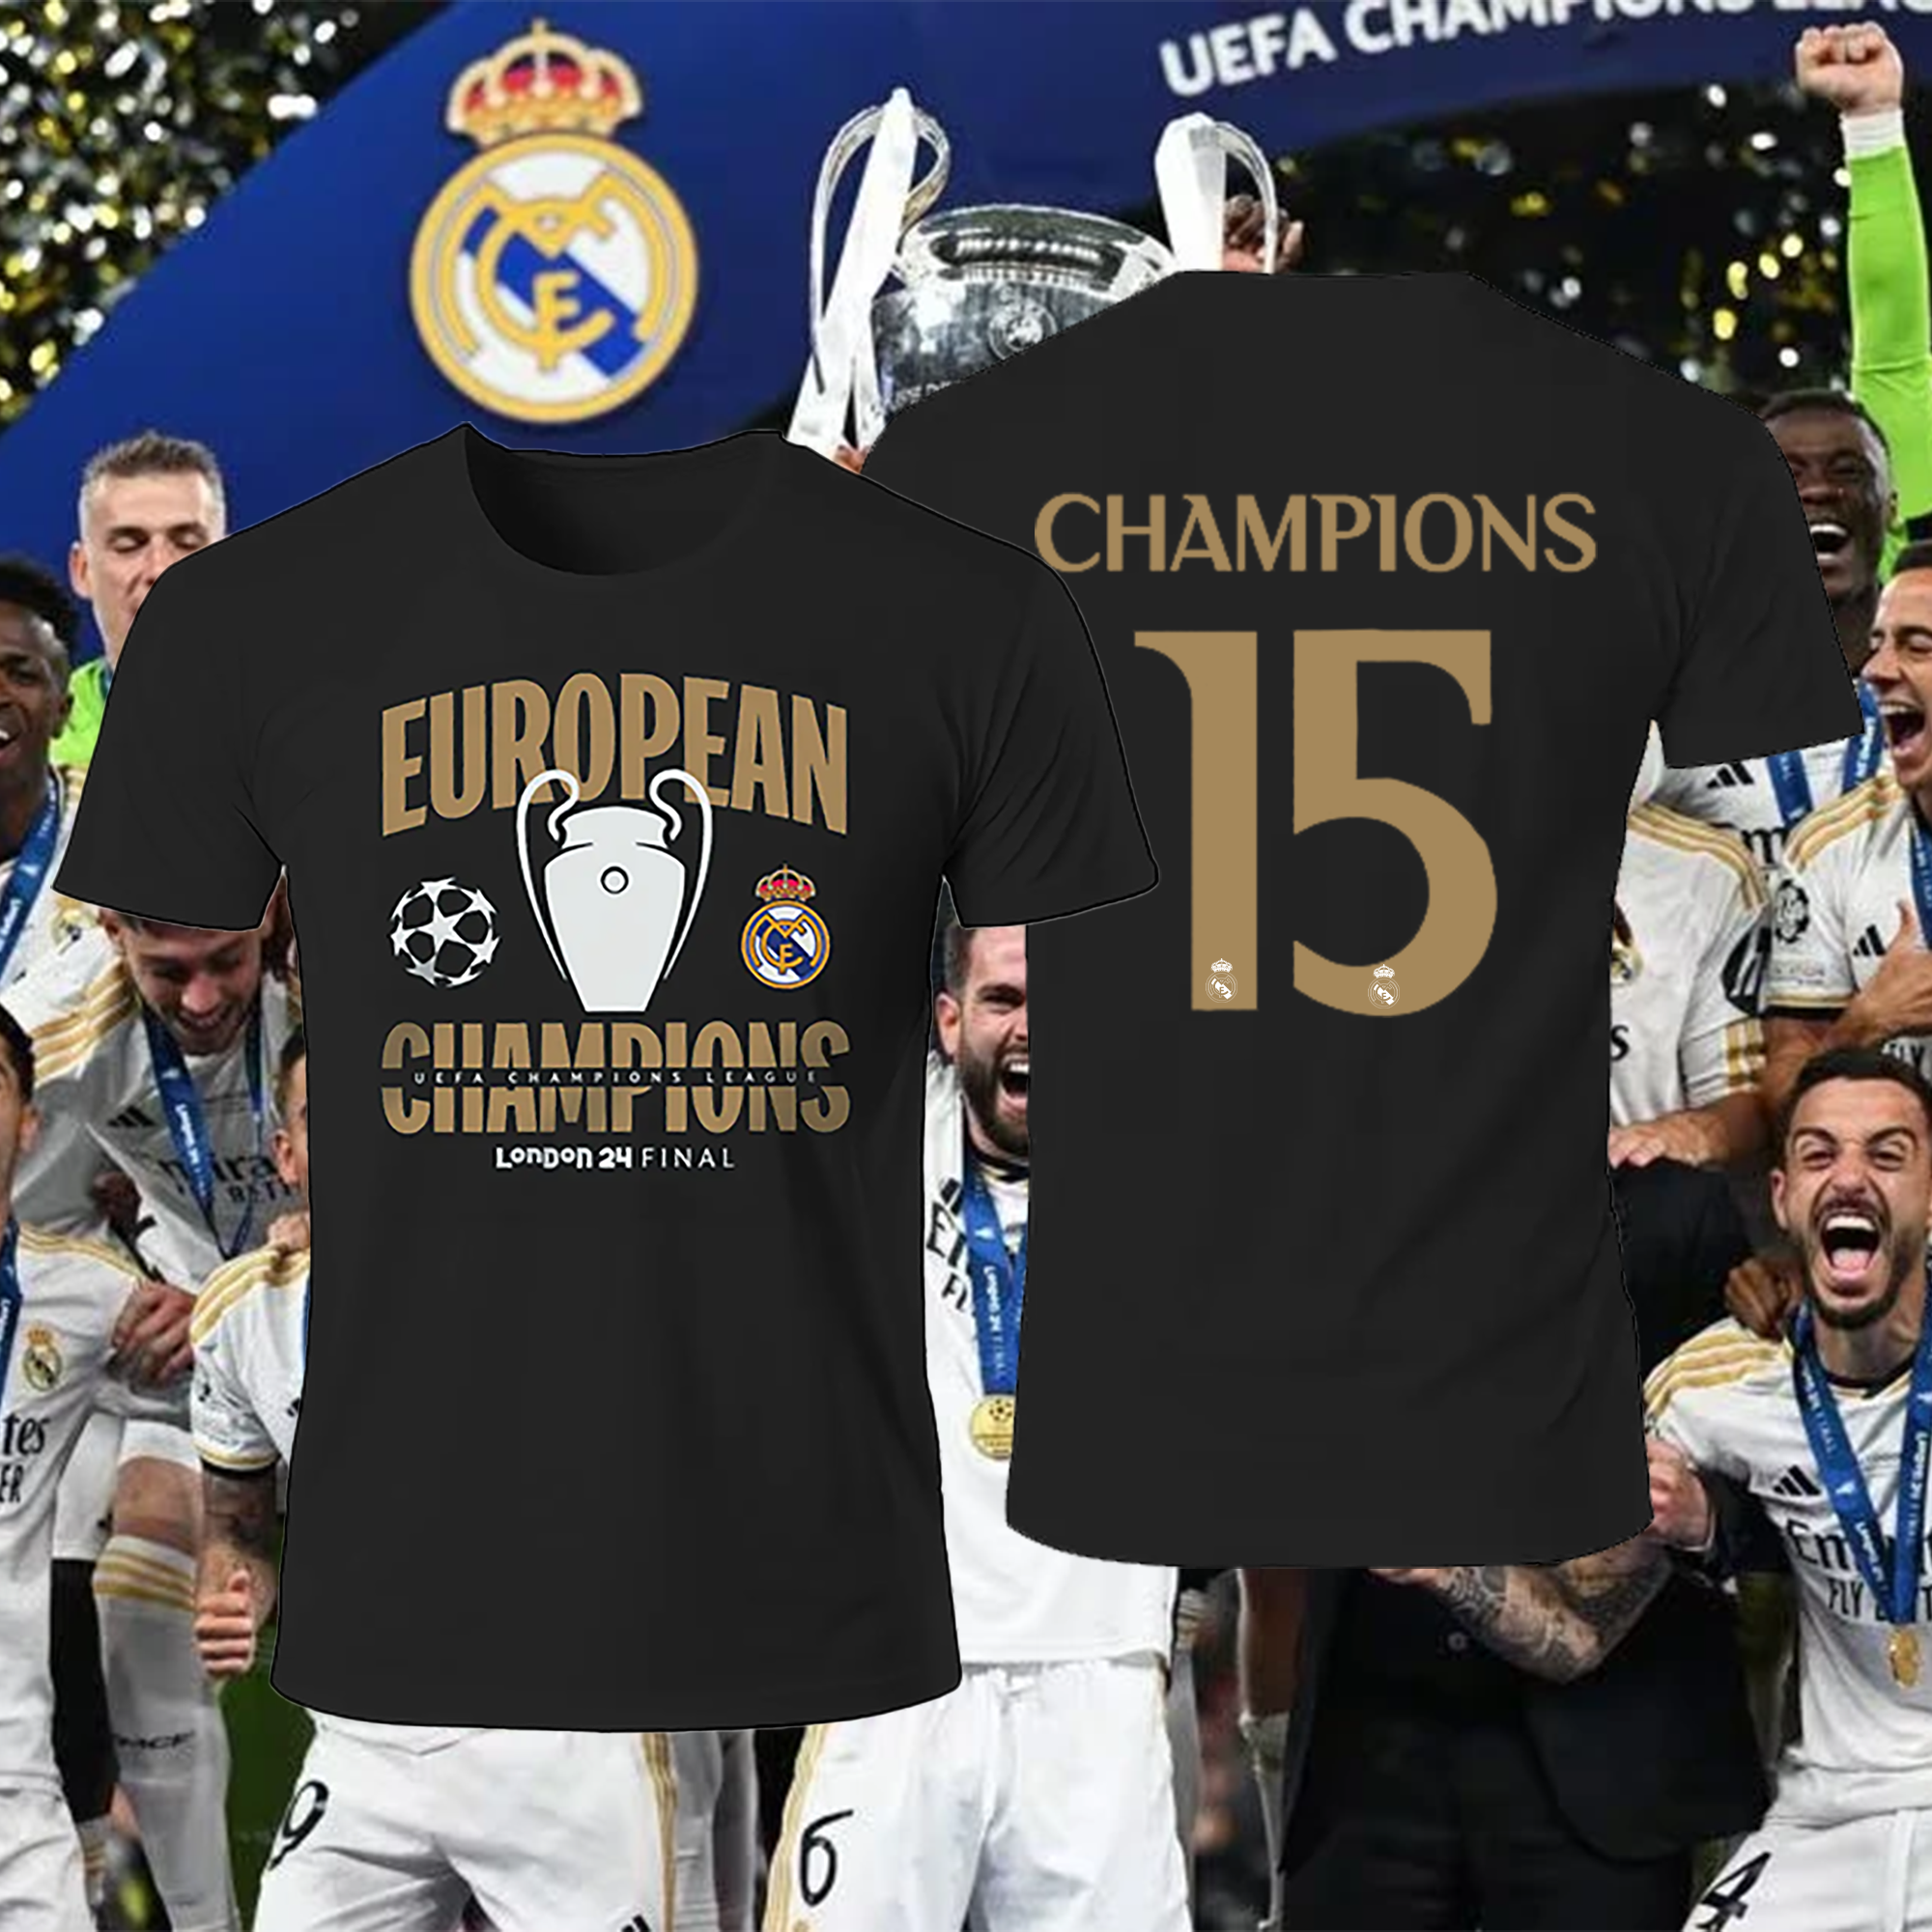 Champions 15 T-shirt PT56787 (Copy)